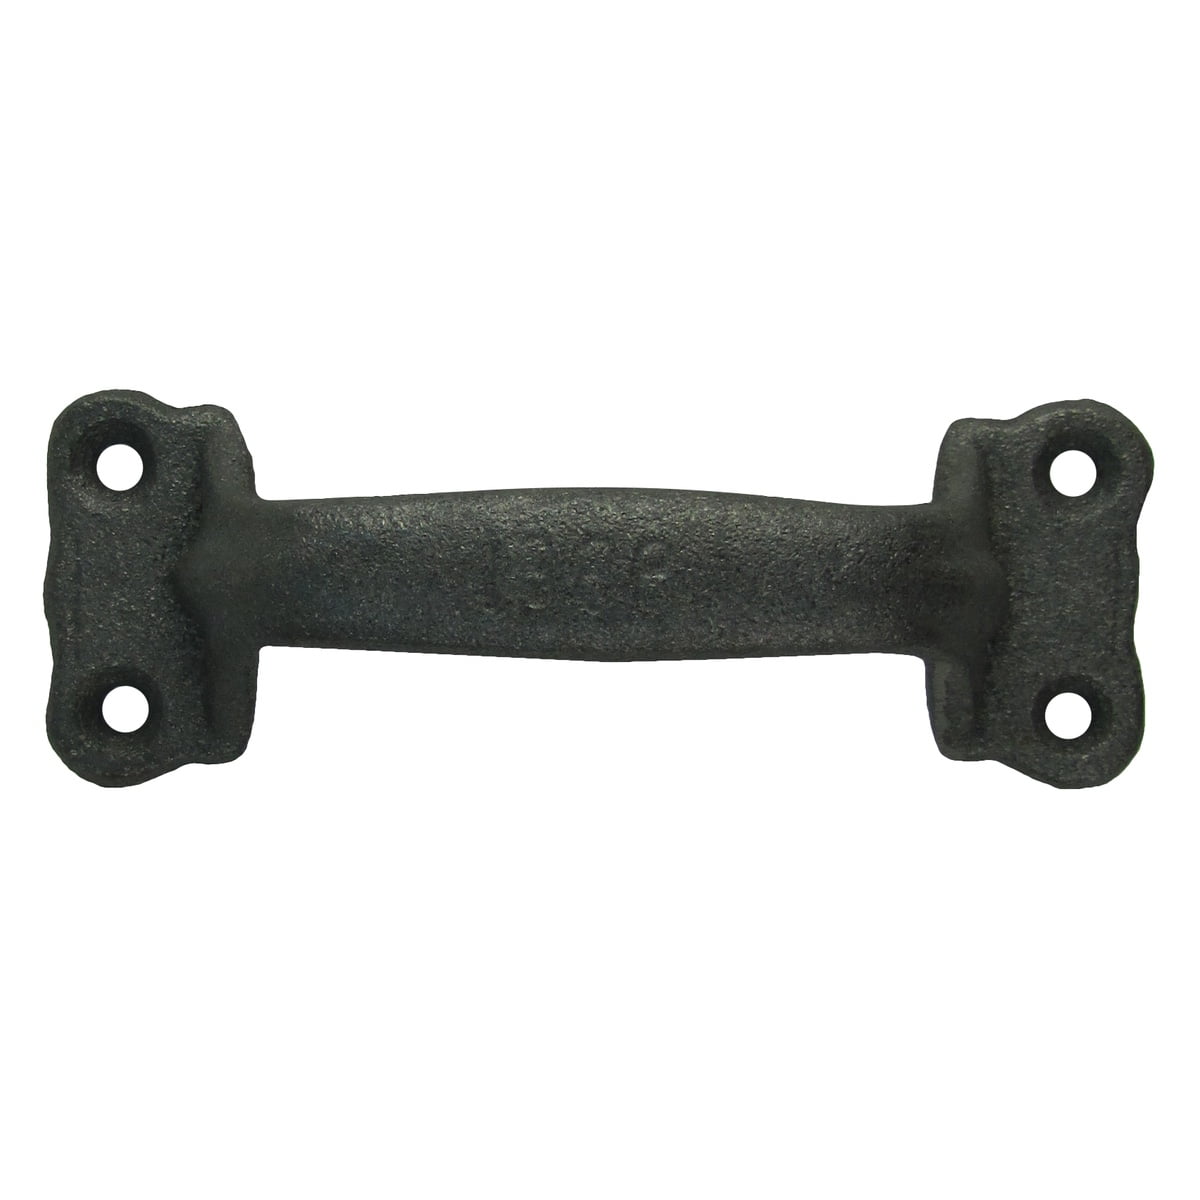 Heavy Duty Metal Door Handle for Grab Stainless Steel Gate Pulls Black Rustic Iron Pull Entry Handles